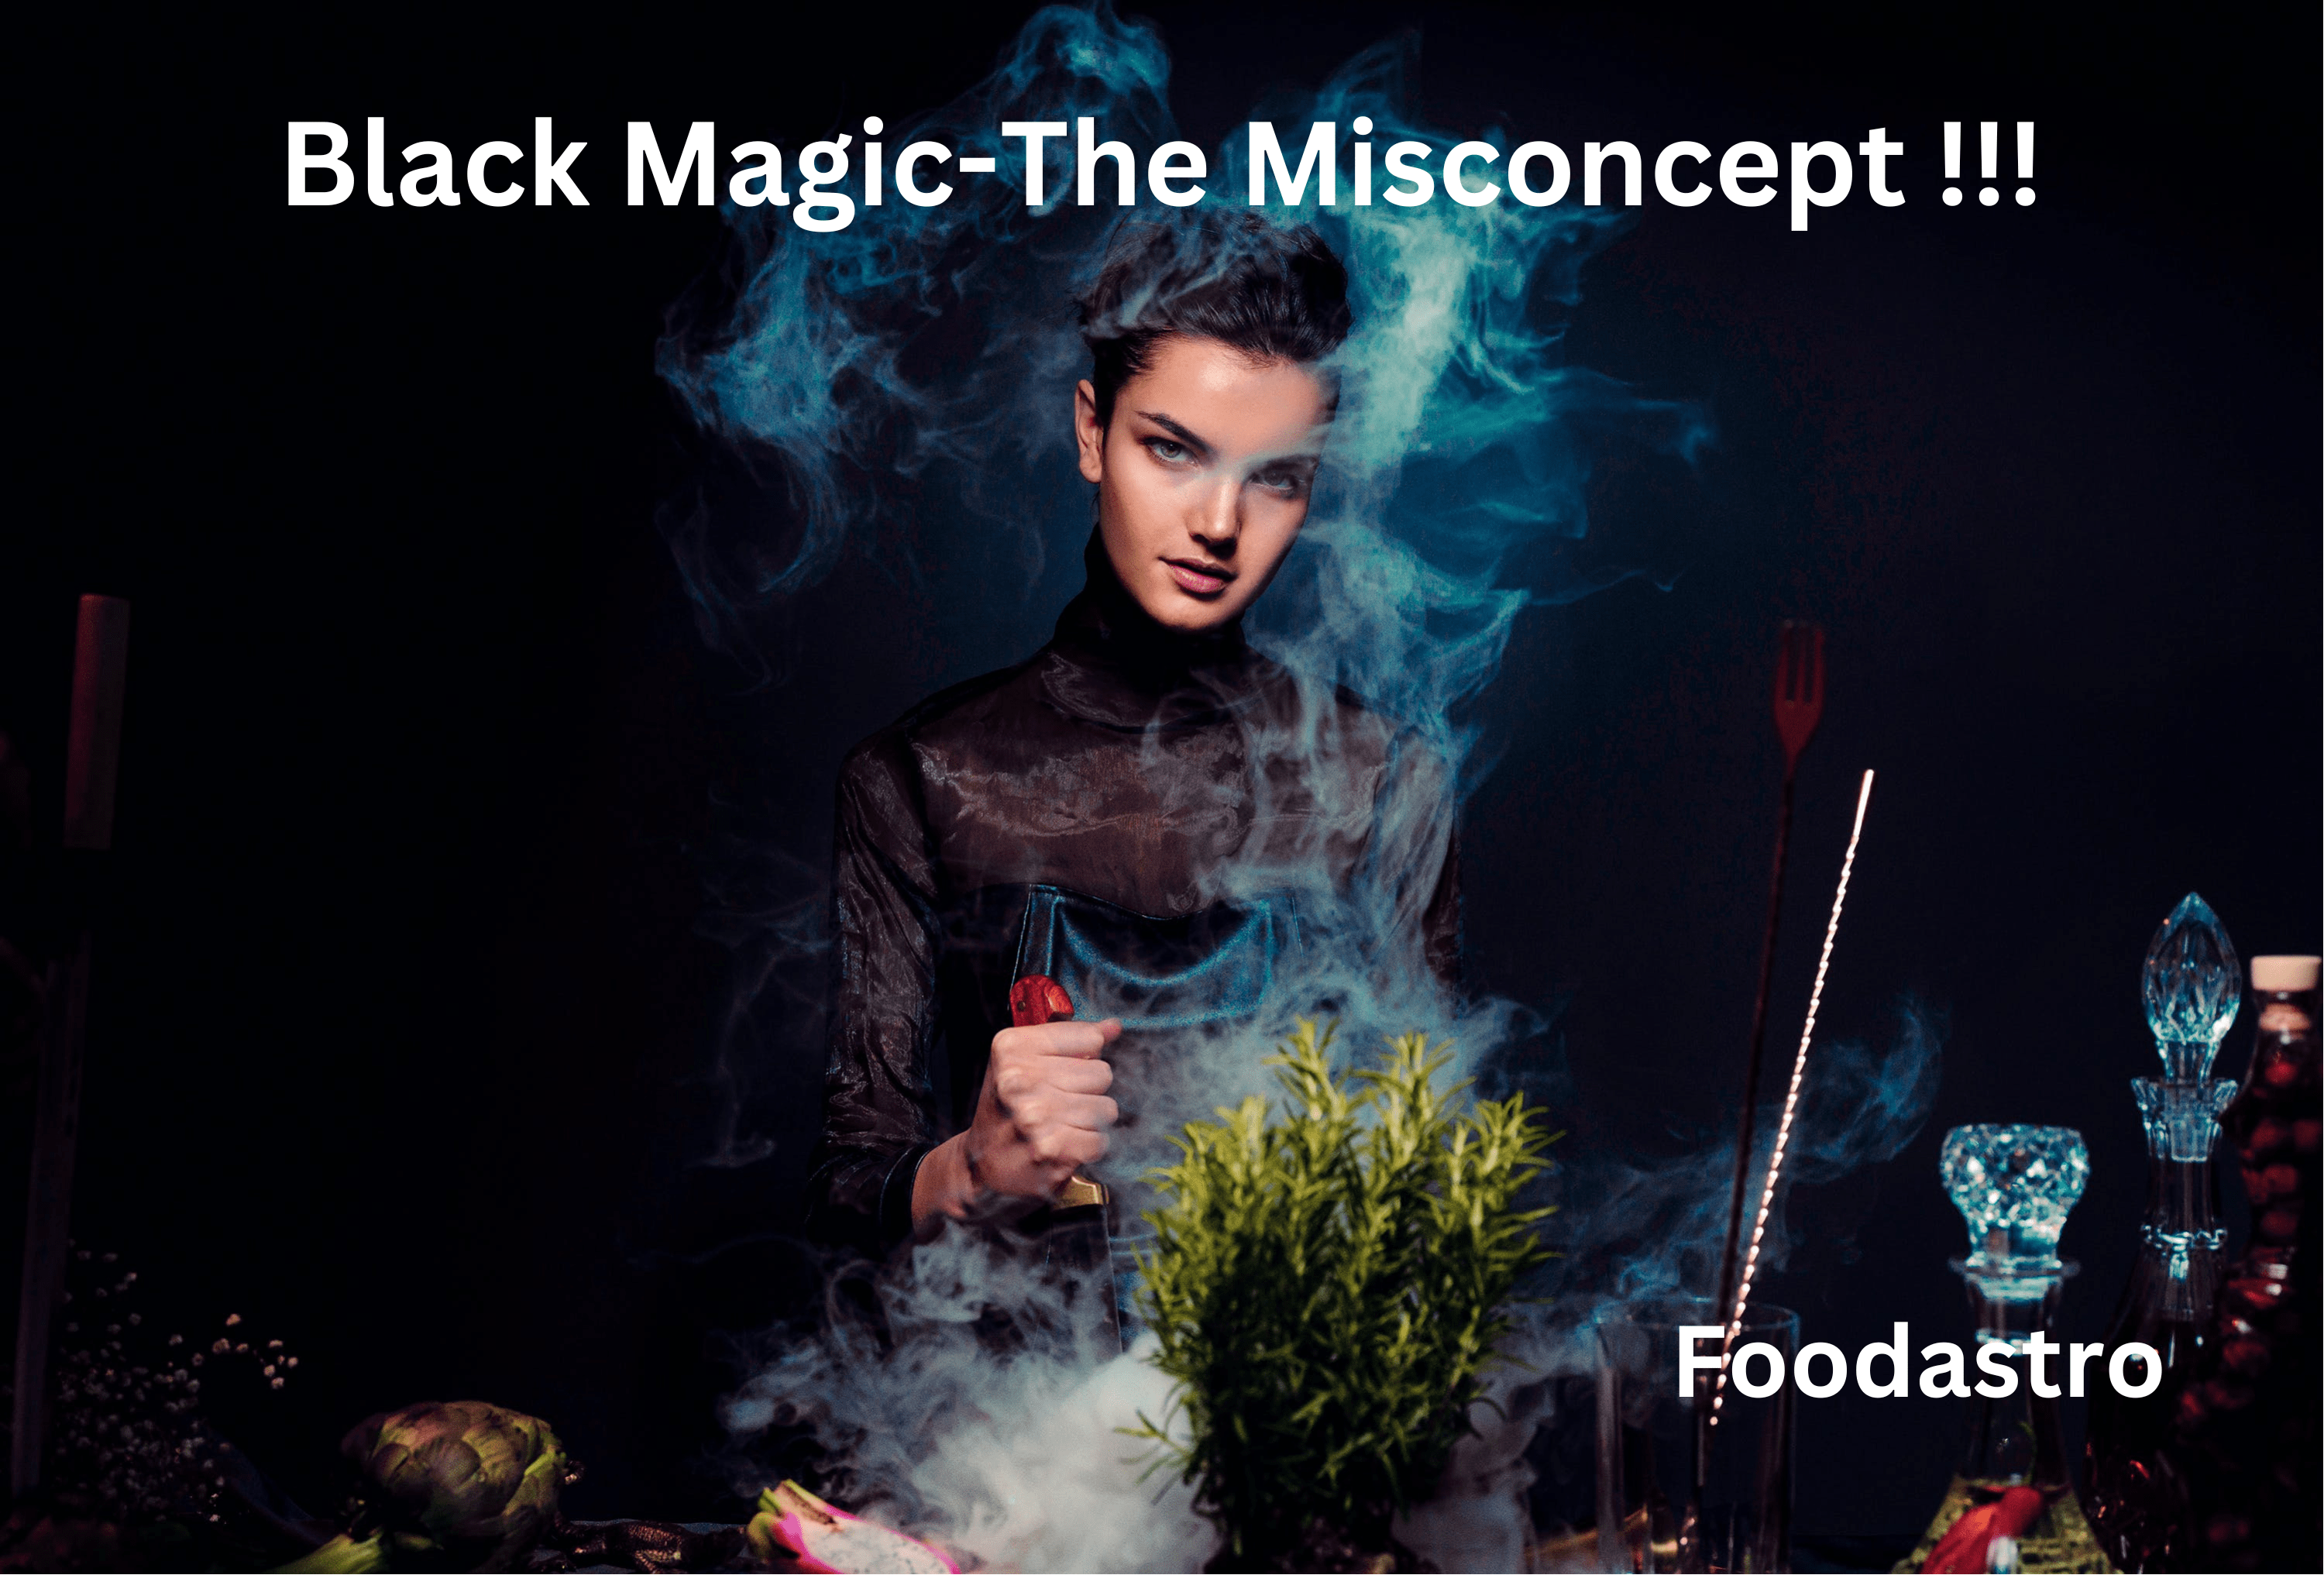 Black Magic-The Misconcept